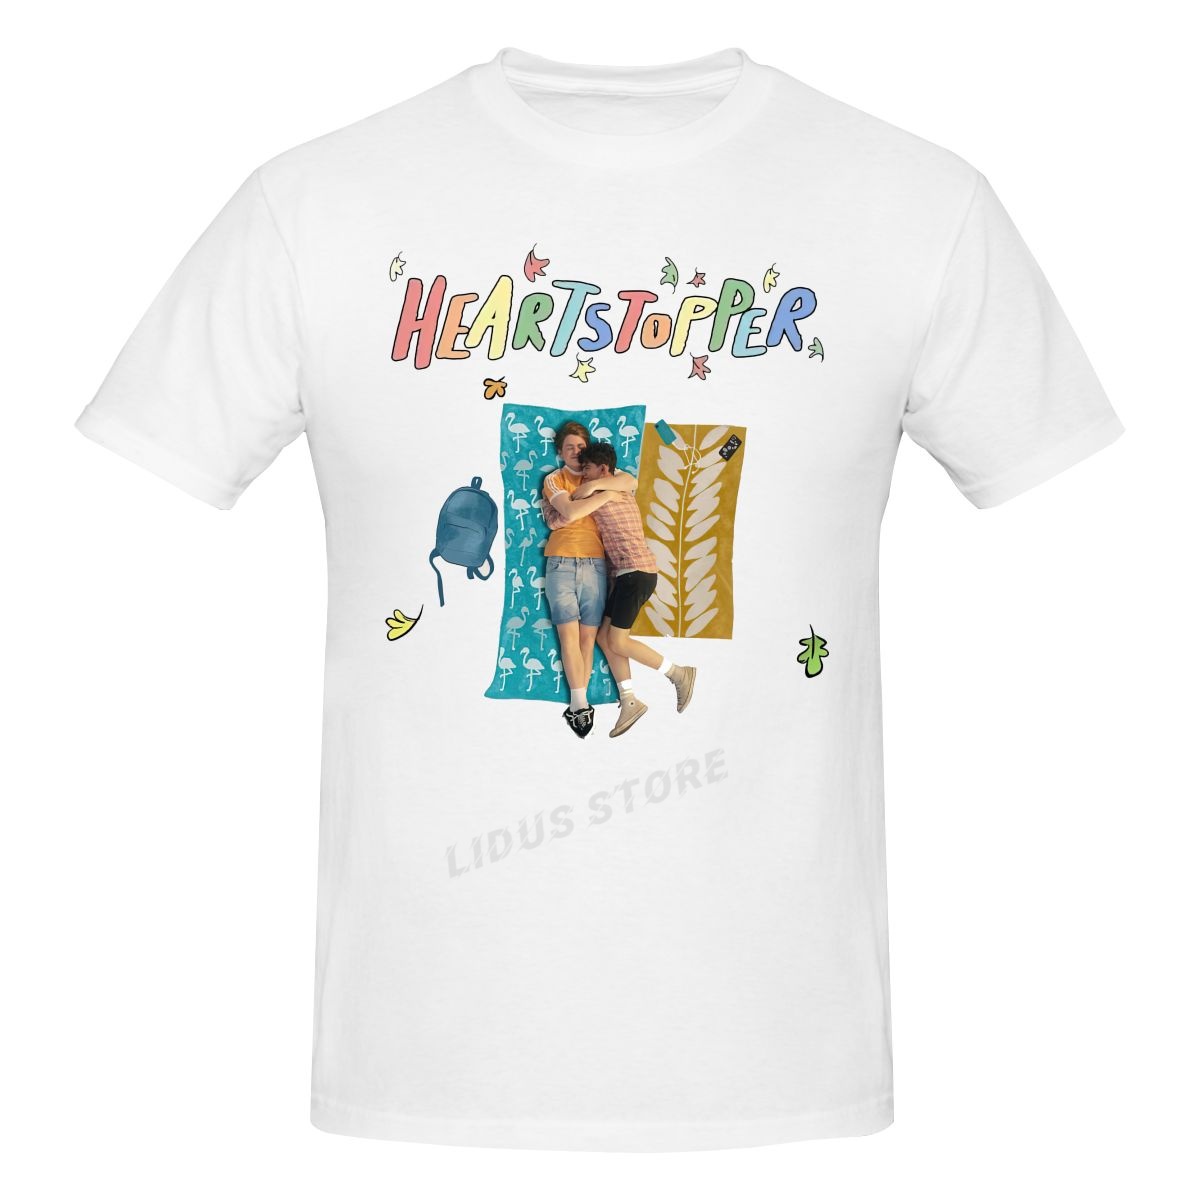 Fun Nick And Charlie Heartstopper T Shirt Clothing Graphics Tshirt Short Sleeve Sweatshirt undershirt Unisex Shirt Tee